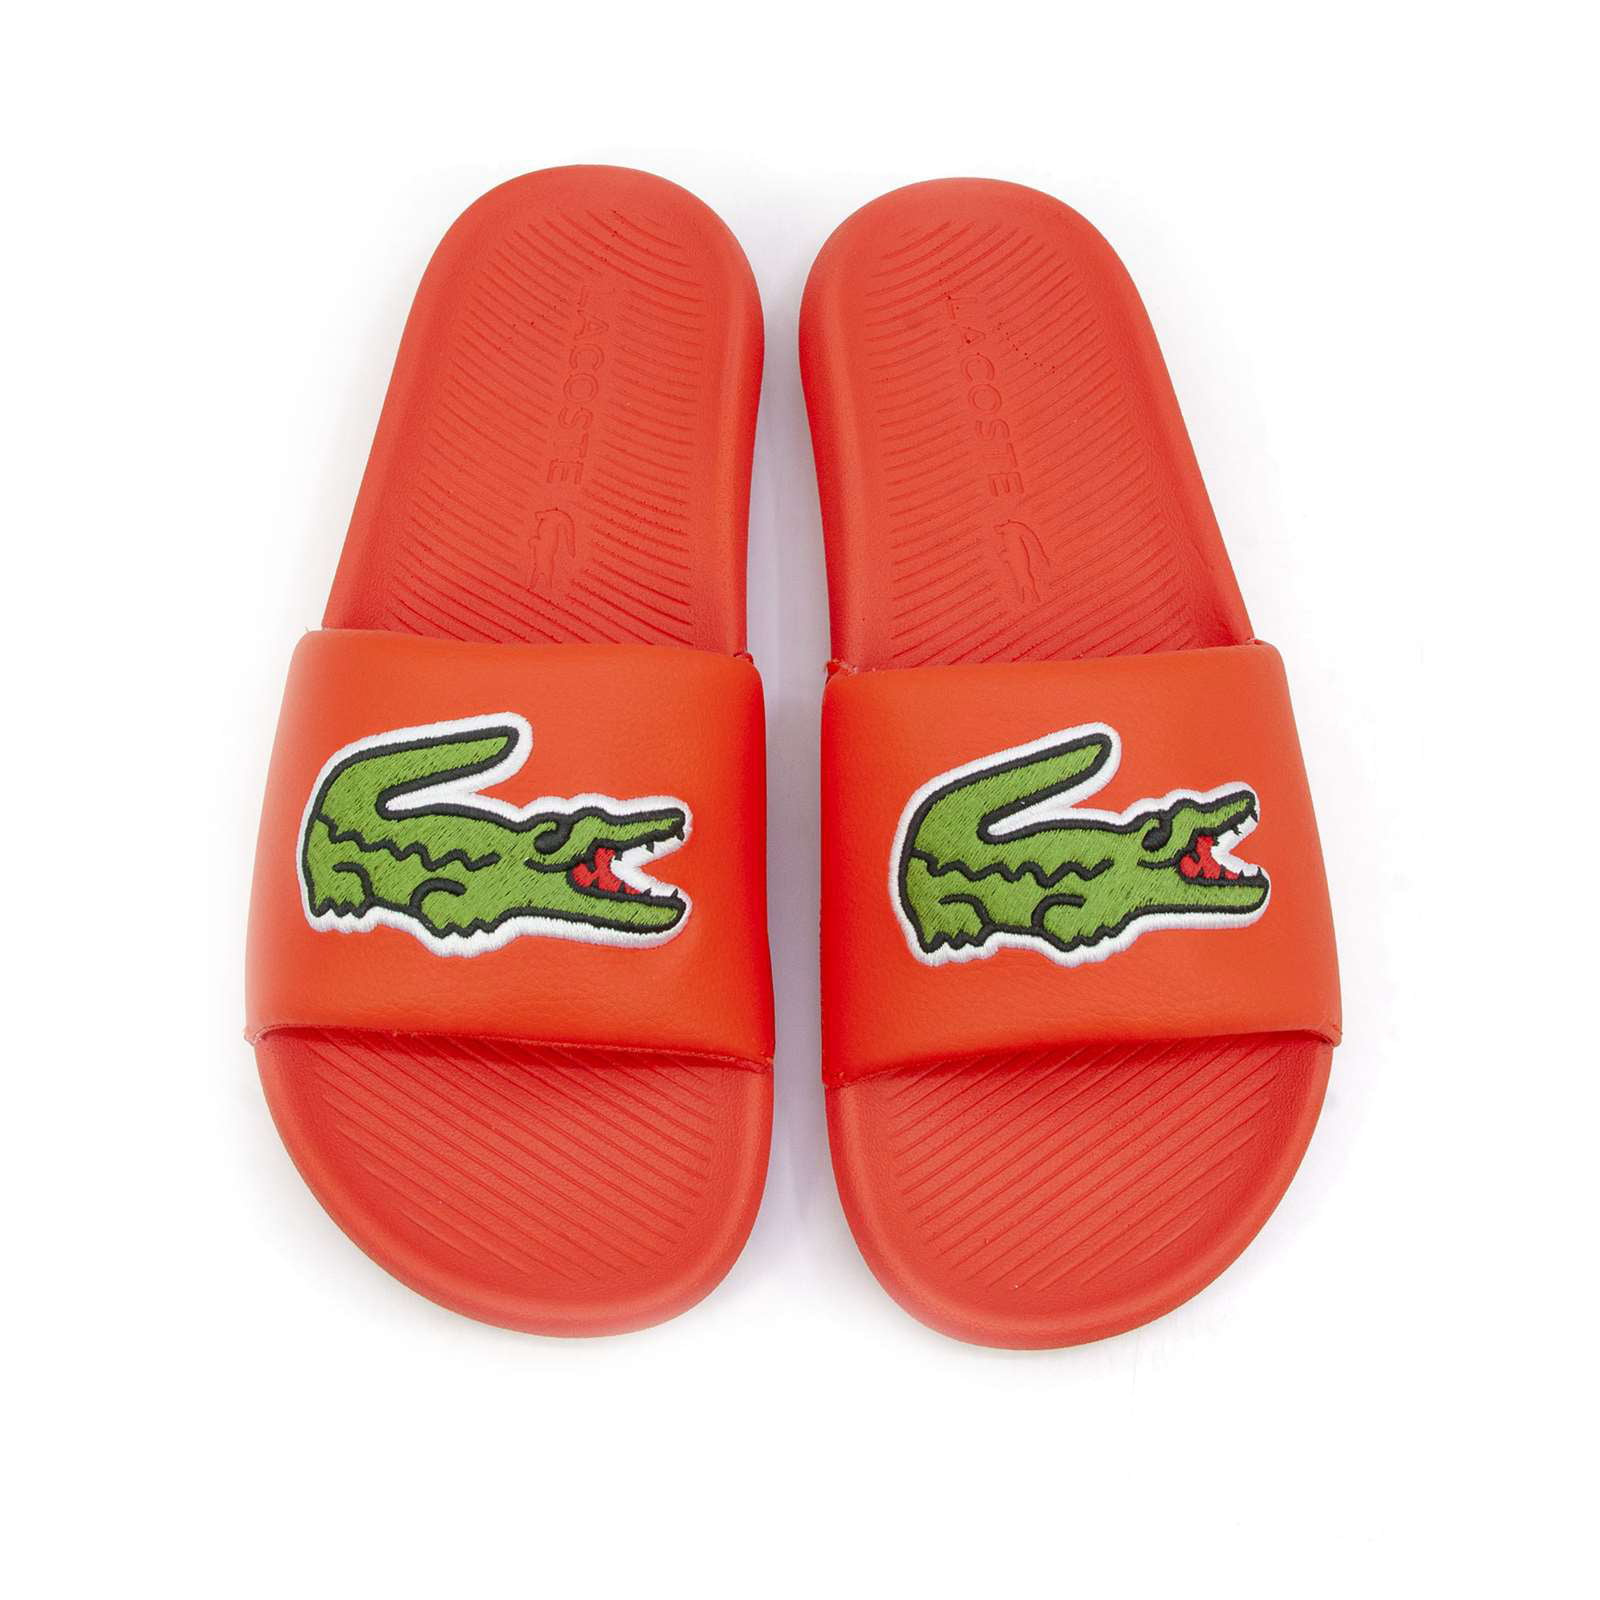 Lacoste Men's Croco Slide Sandal 